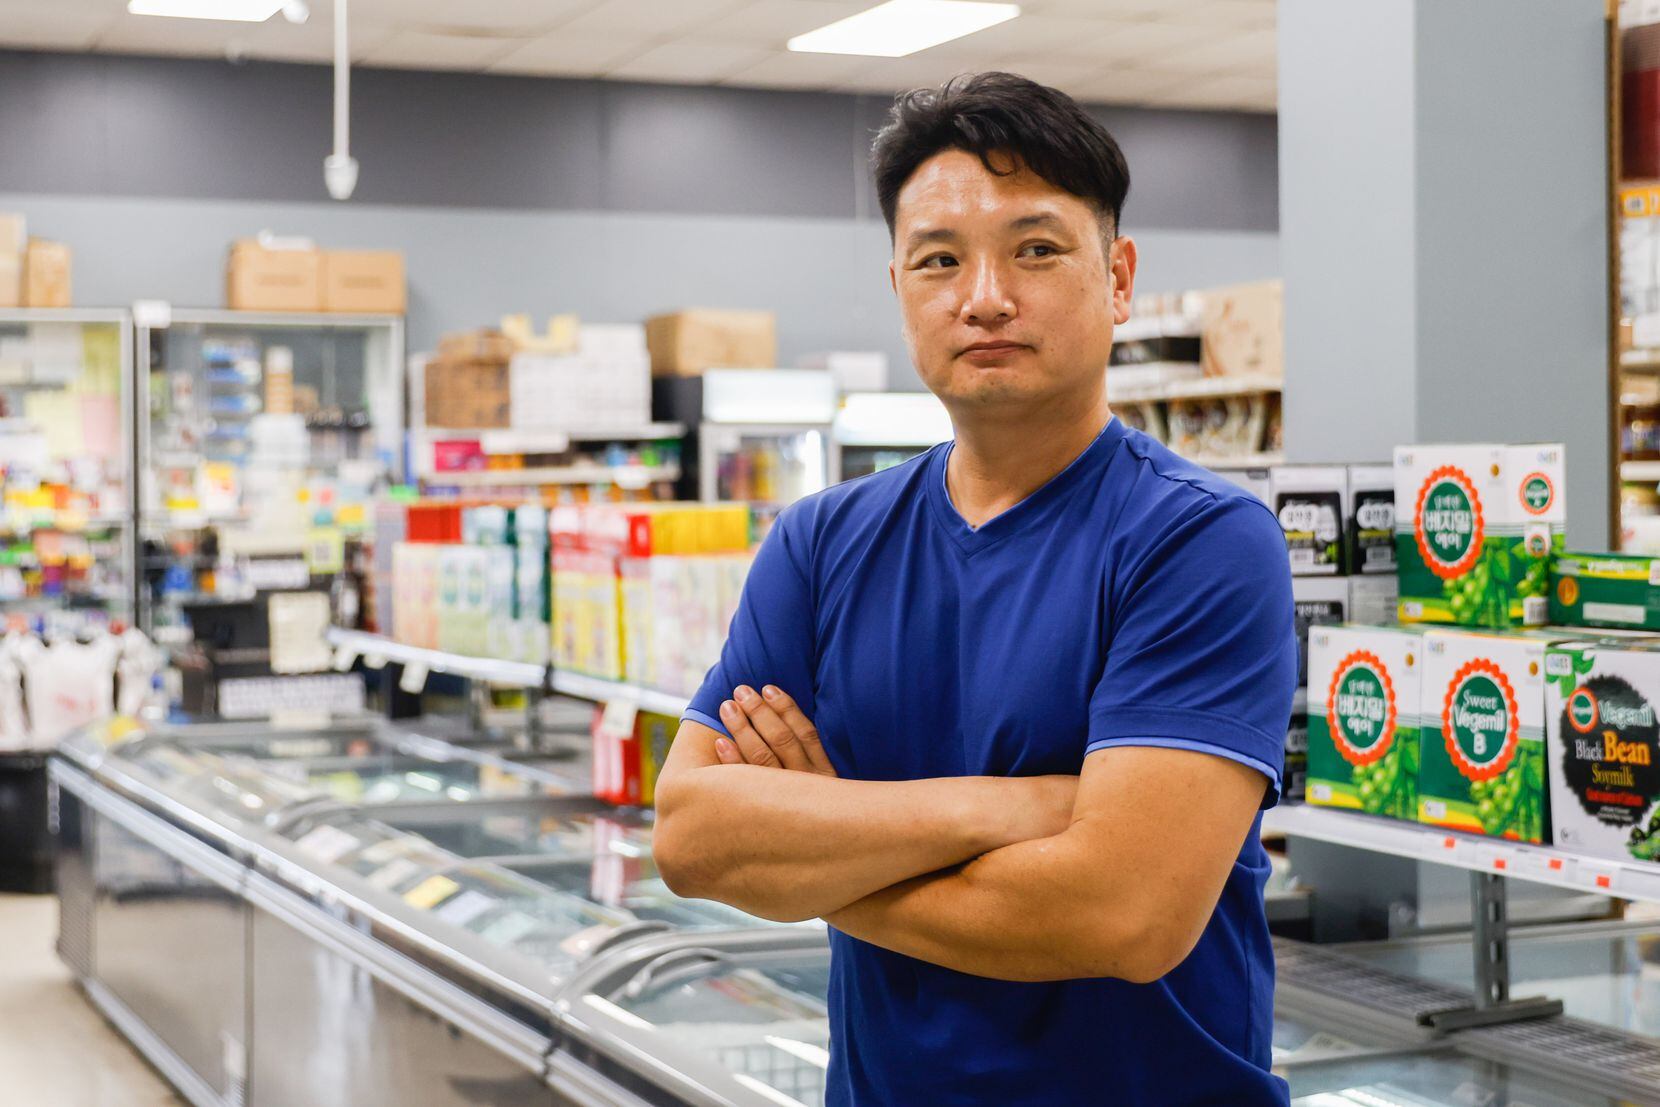 Rich Kim operates Shin Chon Market, the longest-surviving Korean grocery store in Dallas.